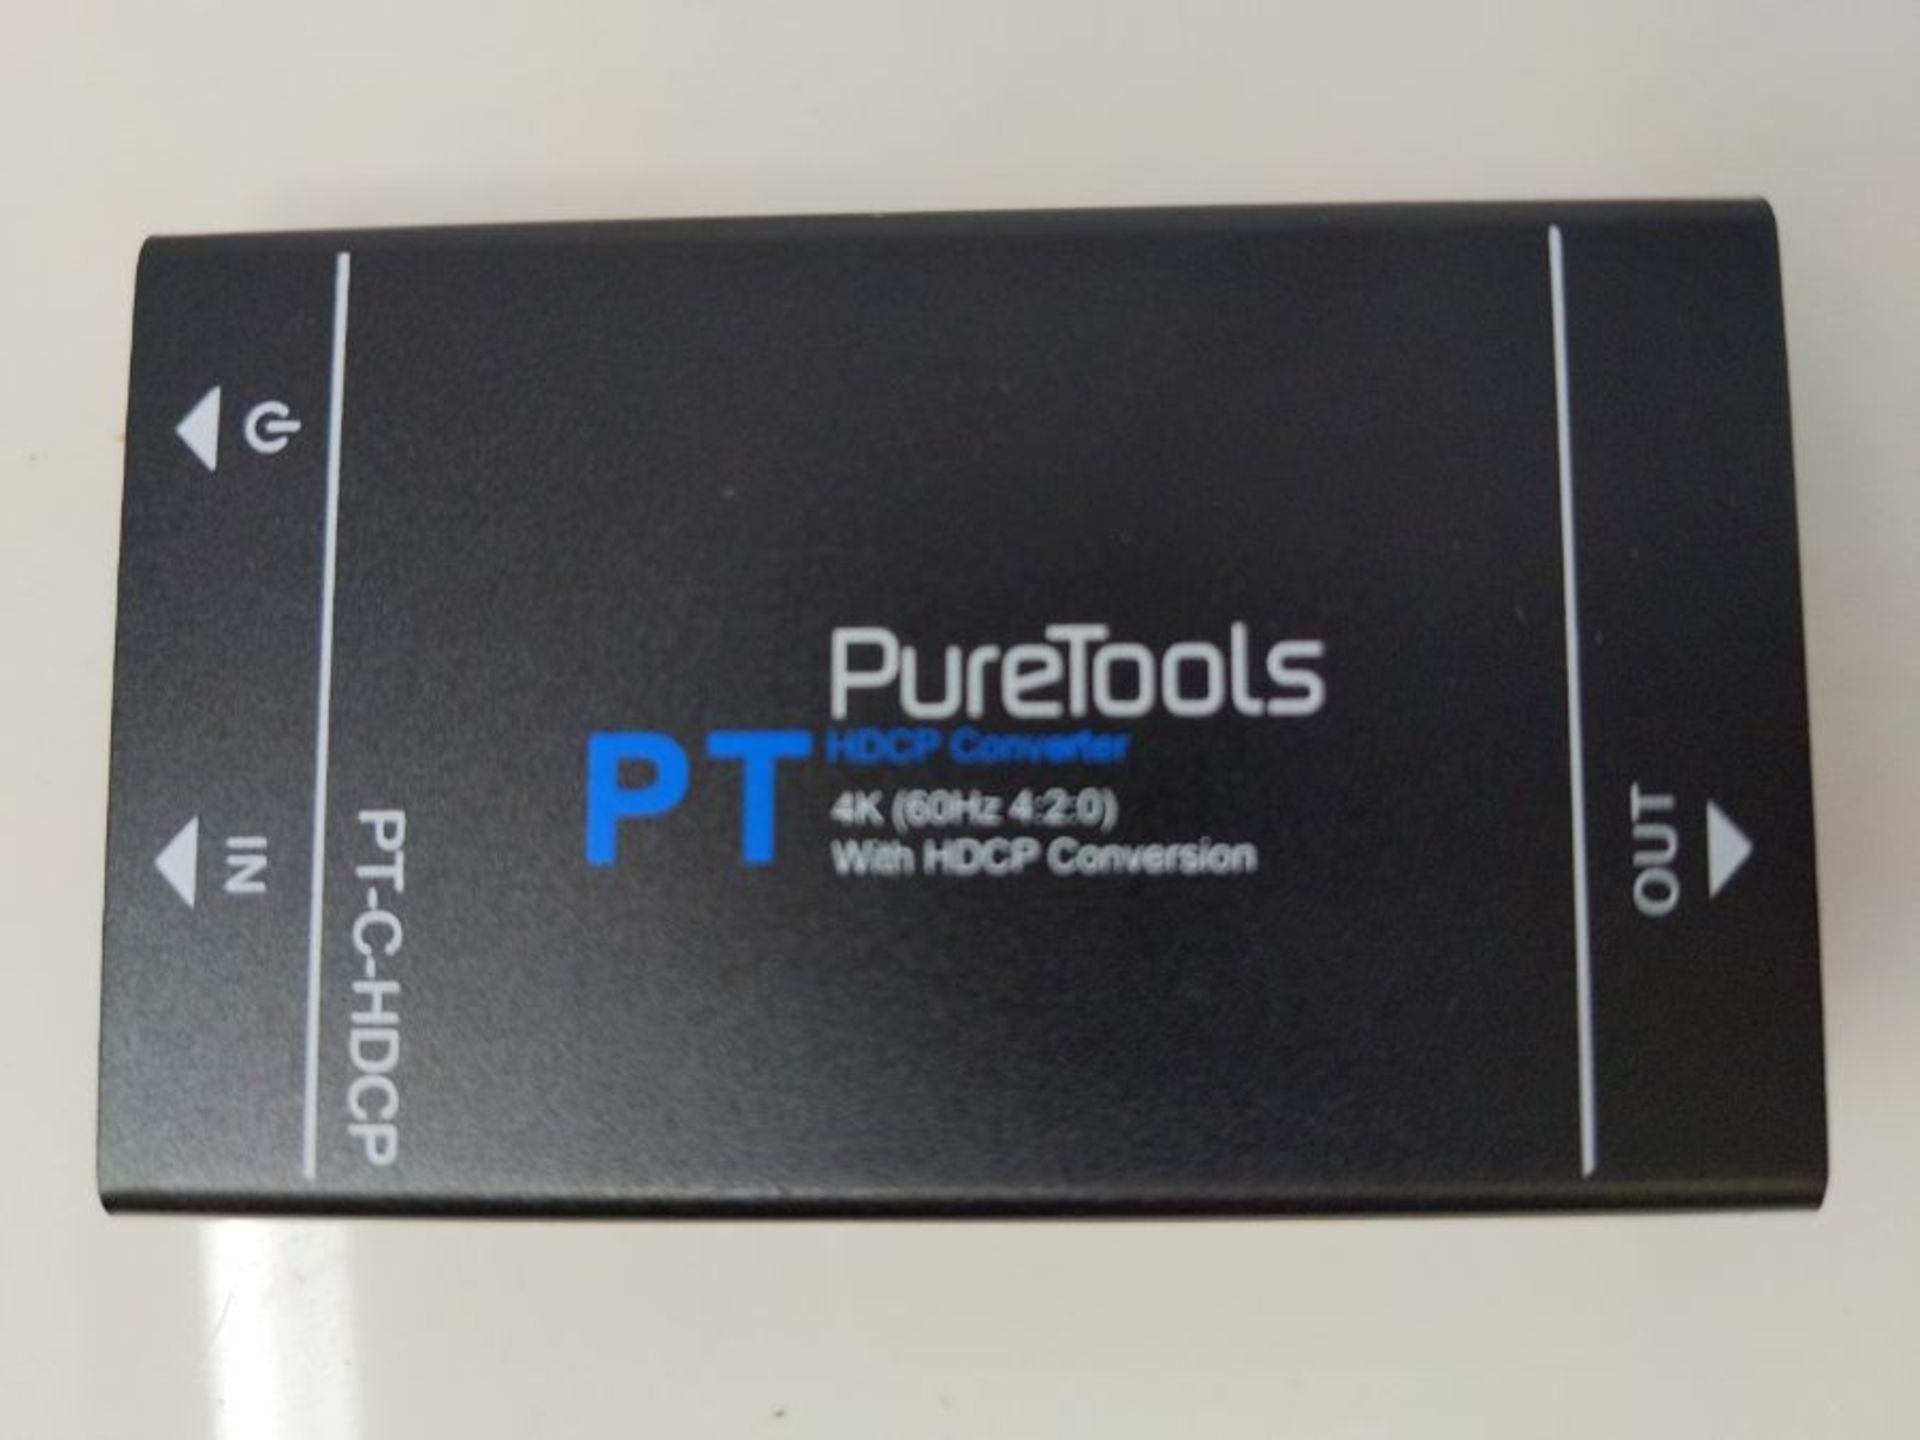 PureTools PT-C-HDCP Converter (4K, HDCP 2.2 to HDCP 1.4) black - Image 3 of 3